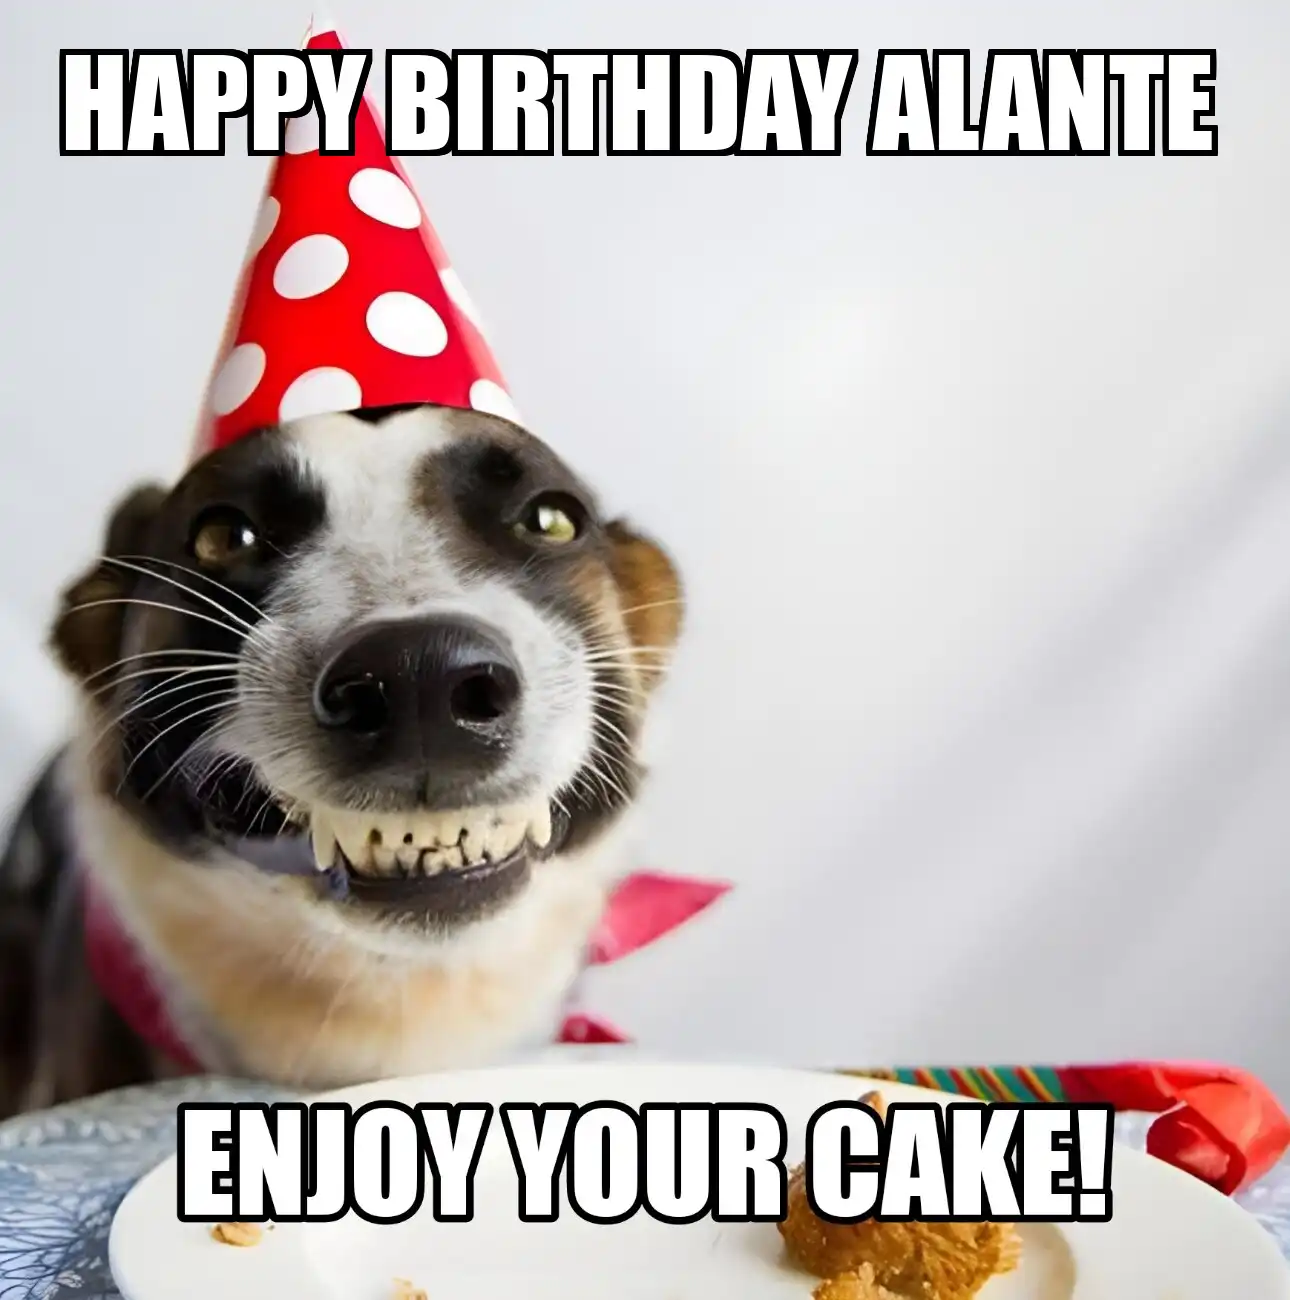 Happy Birthday Alante Enjoy Your Cake Dog Meme